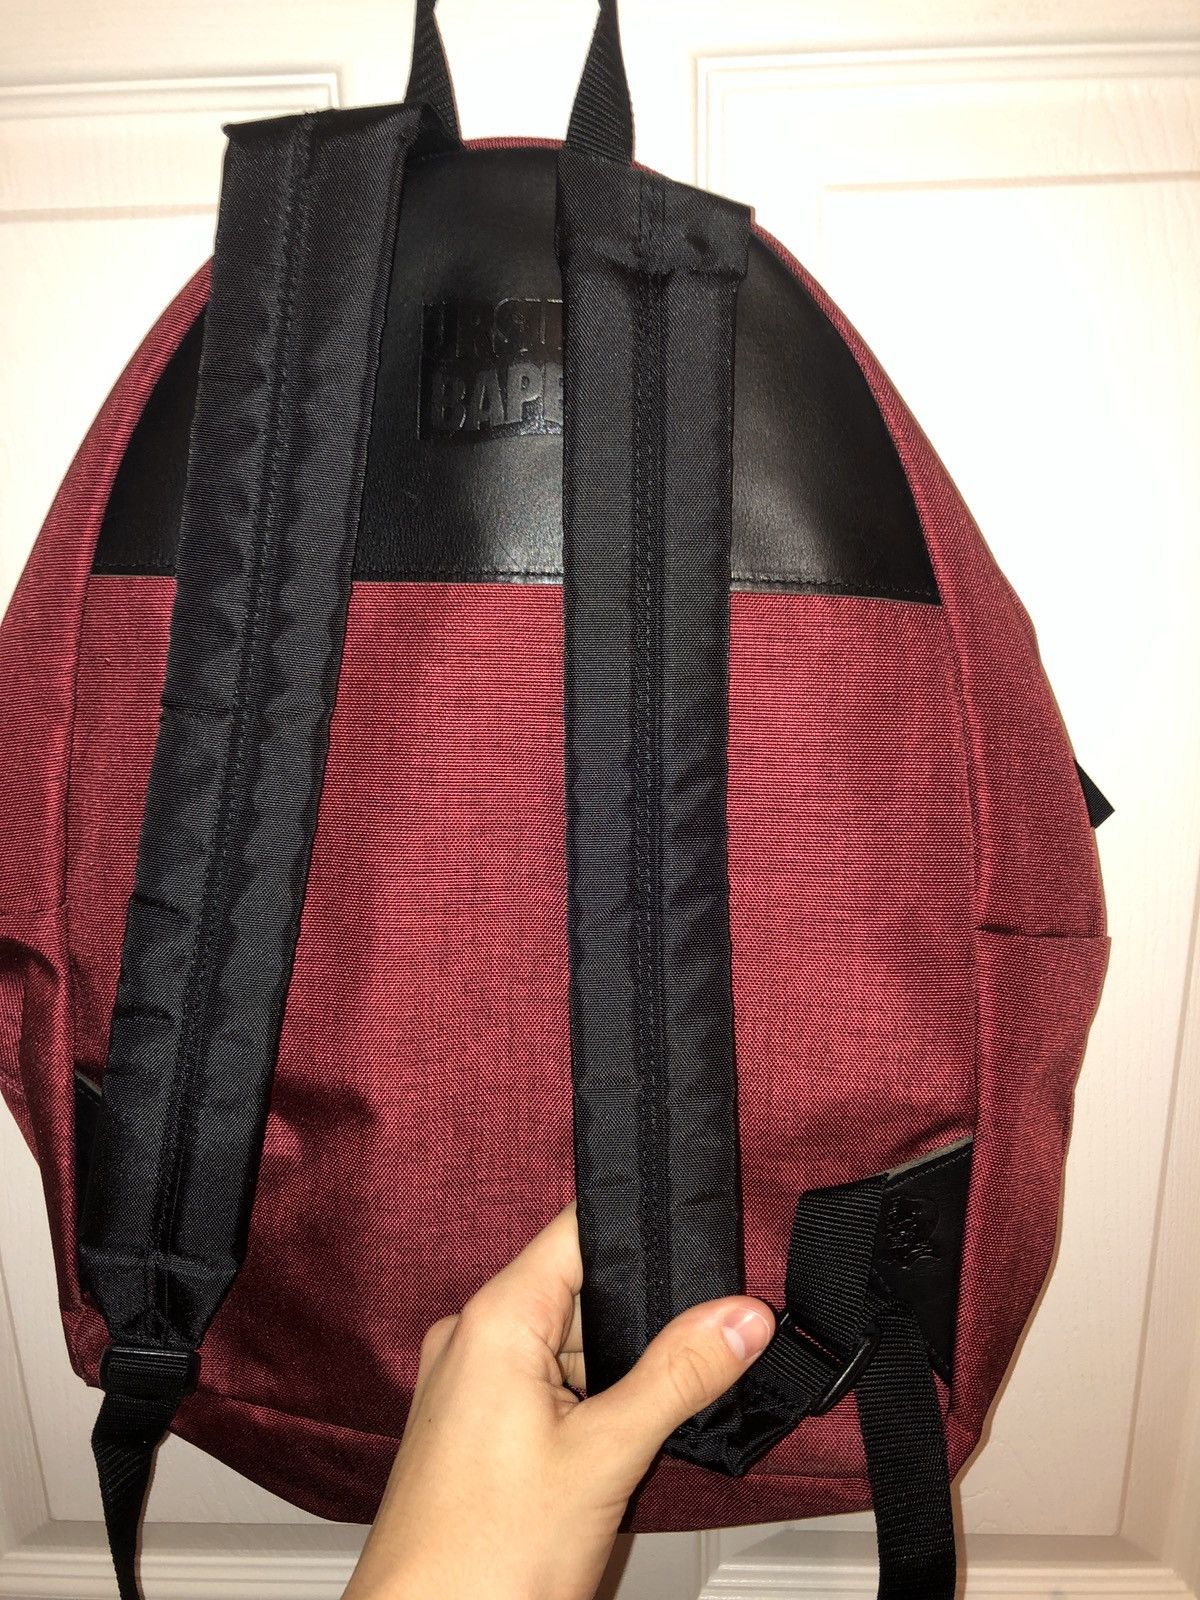 Bape Ursus Bape backpack | Grailed